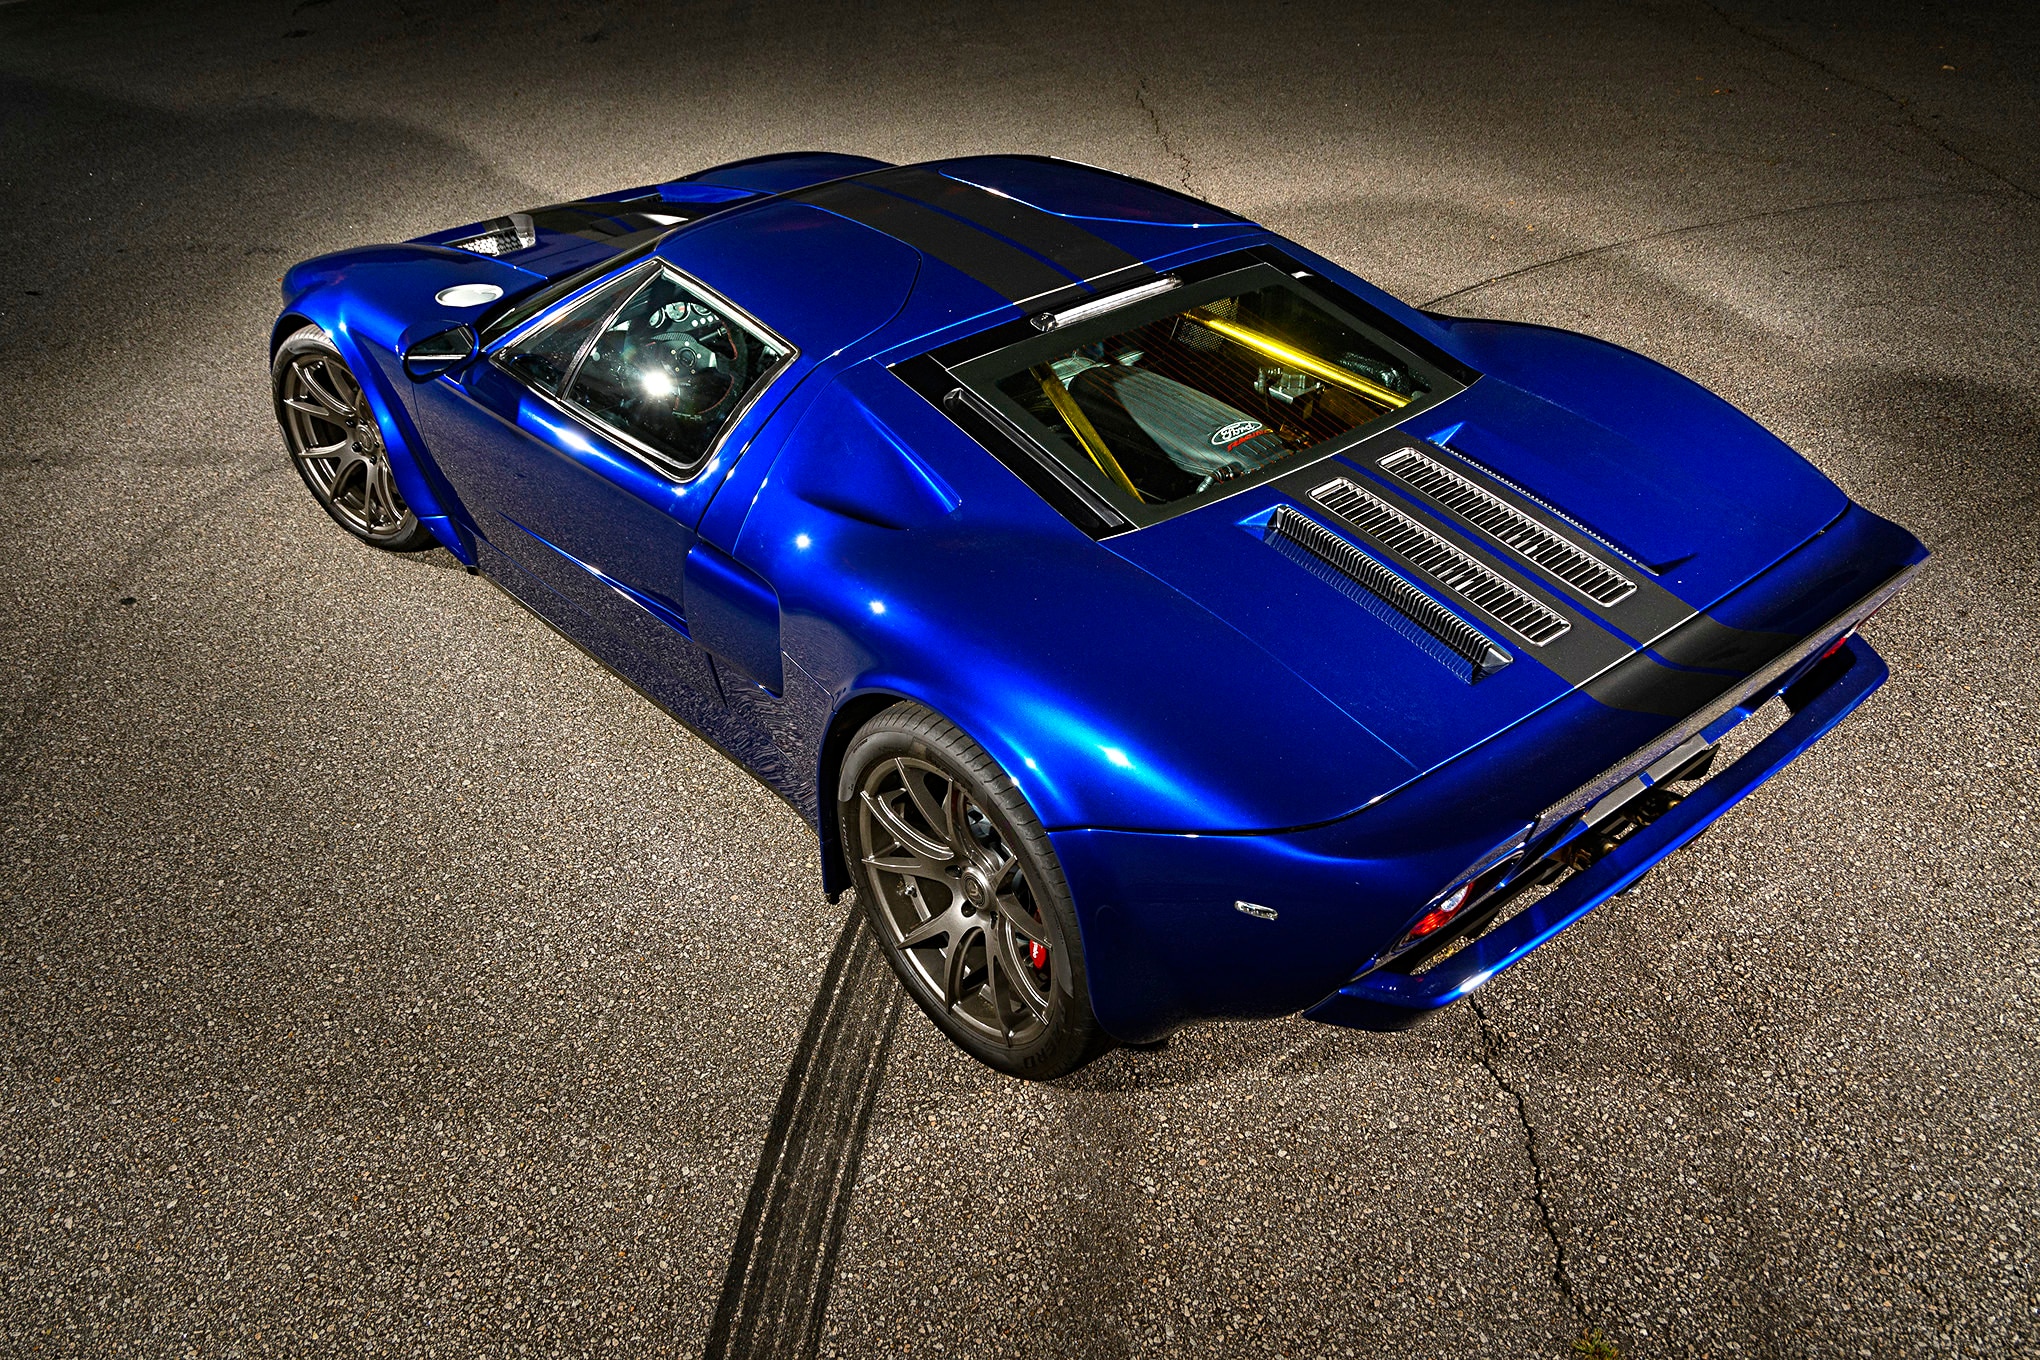 007-Superlite-GT-R-rear-side.jpg